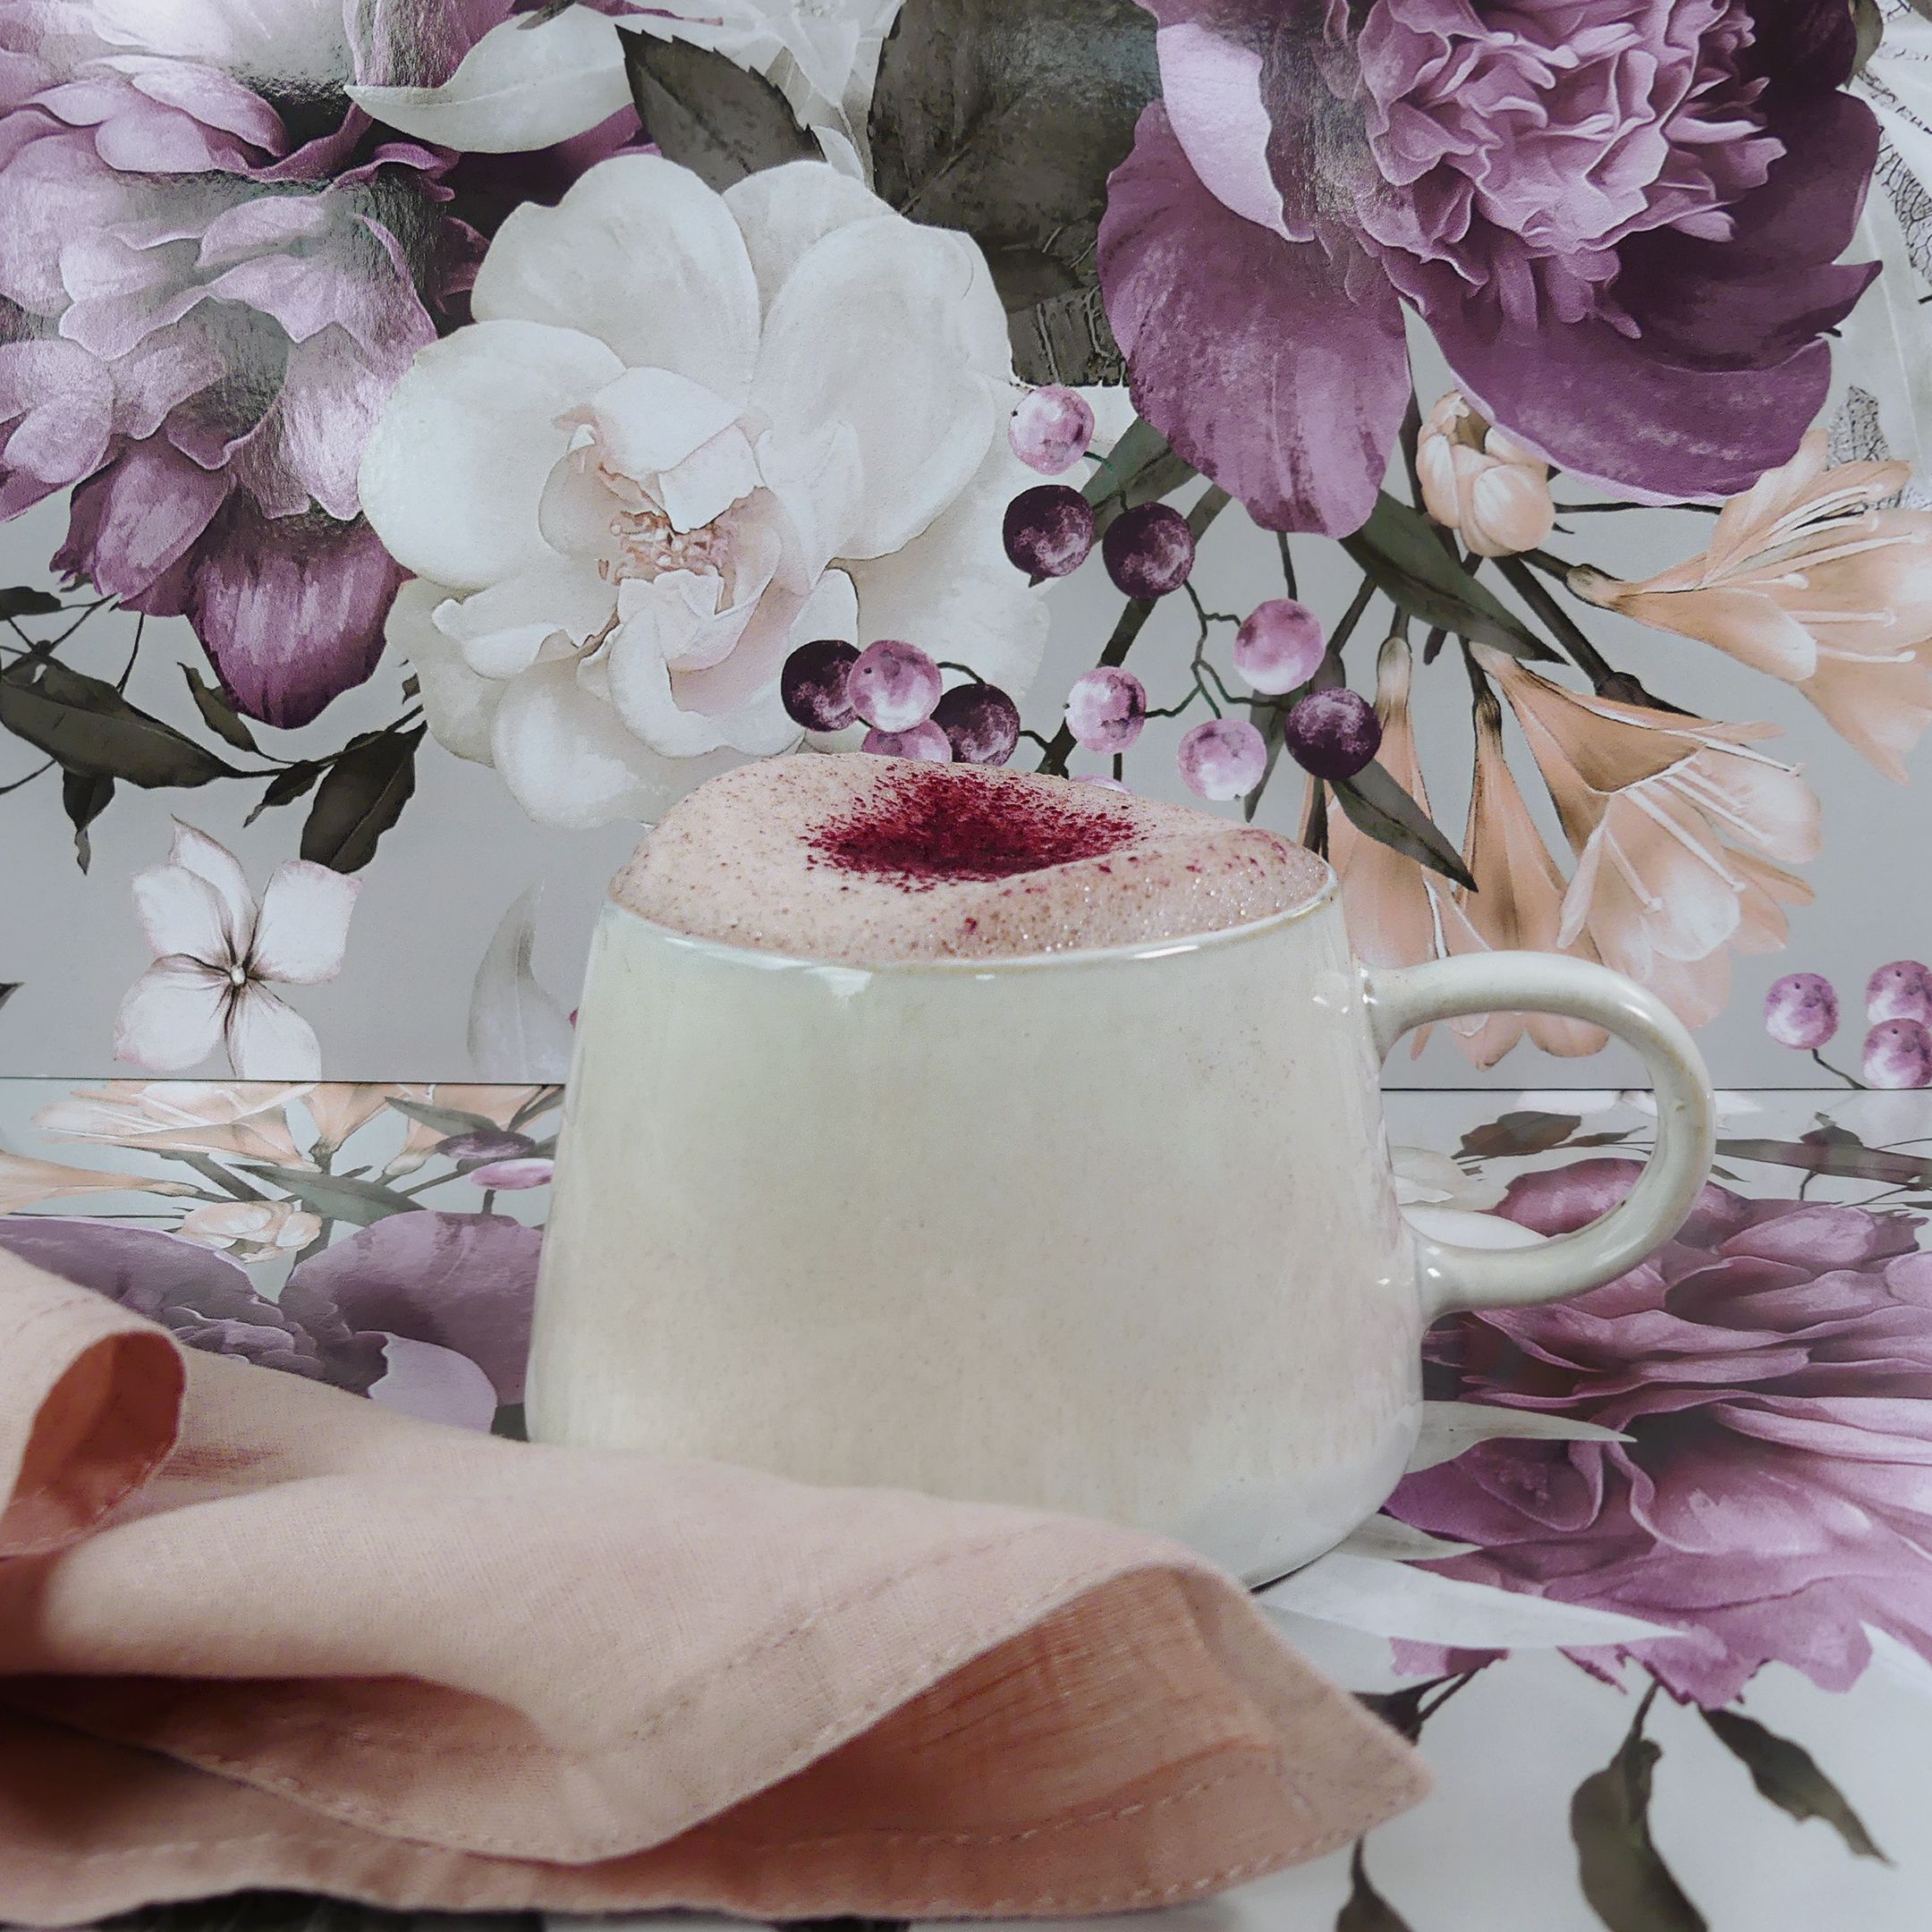 A mug of Queen Garnet Plum latte against a floral backdrop.